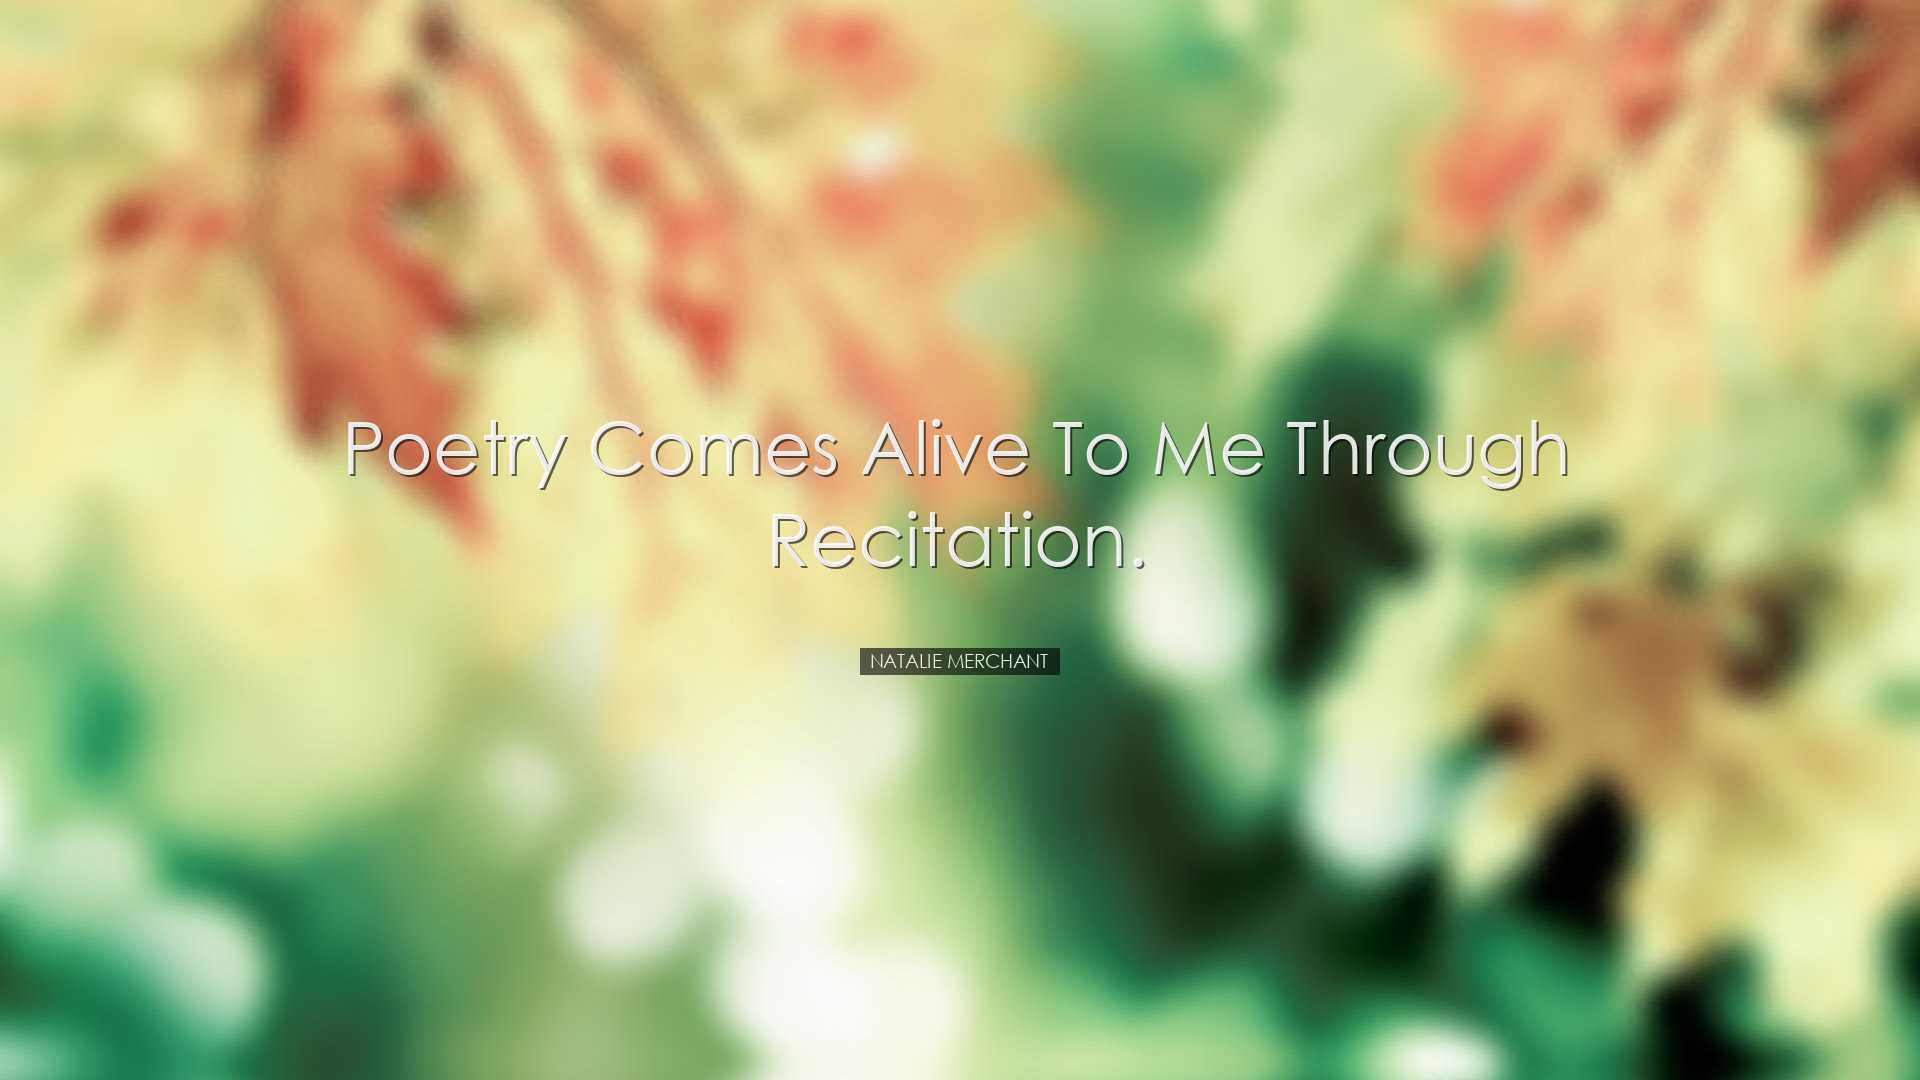 Poetry comes alive to me through recitation. - Natalie Merchant